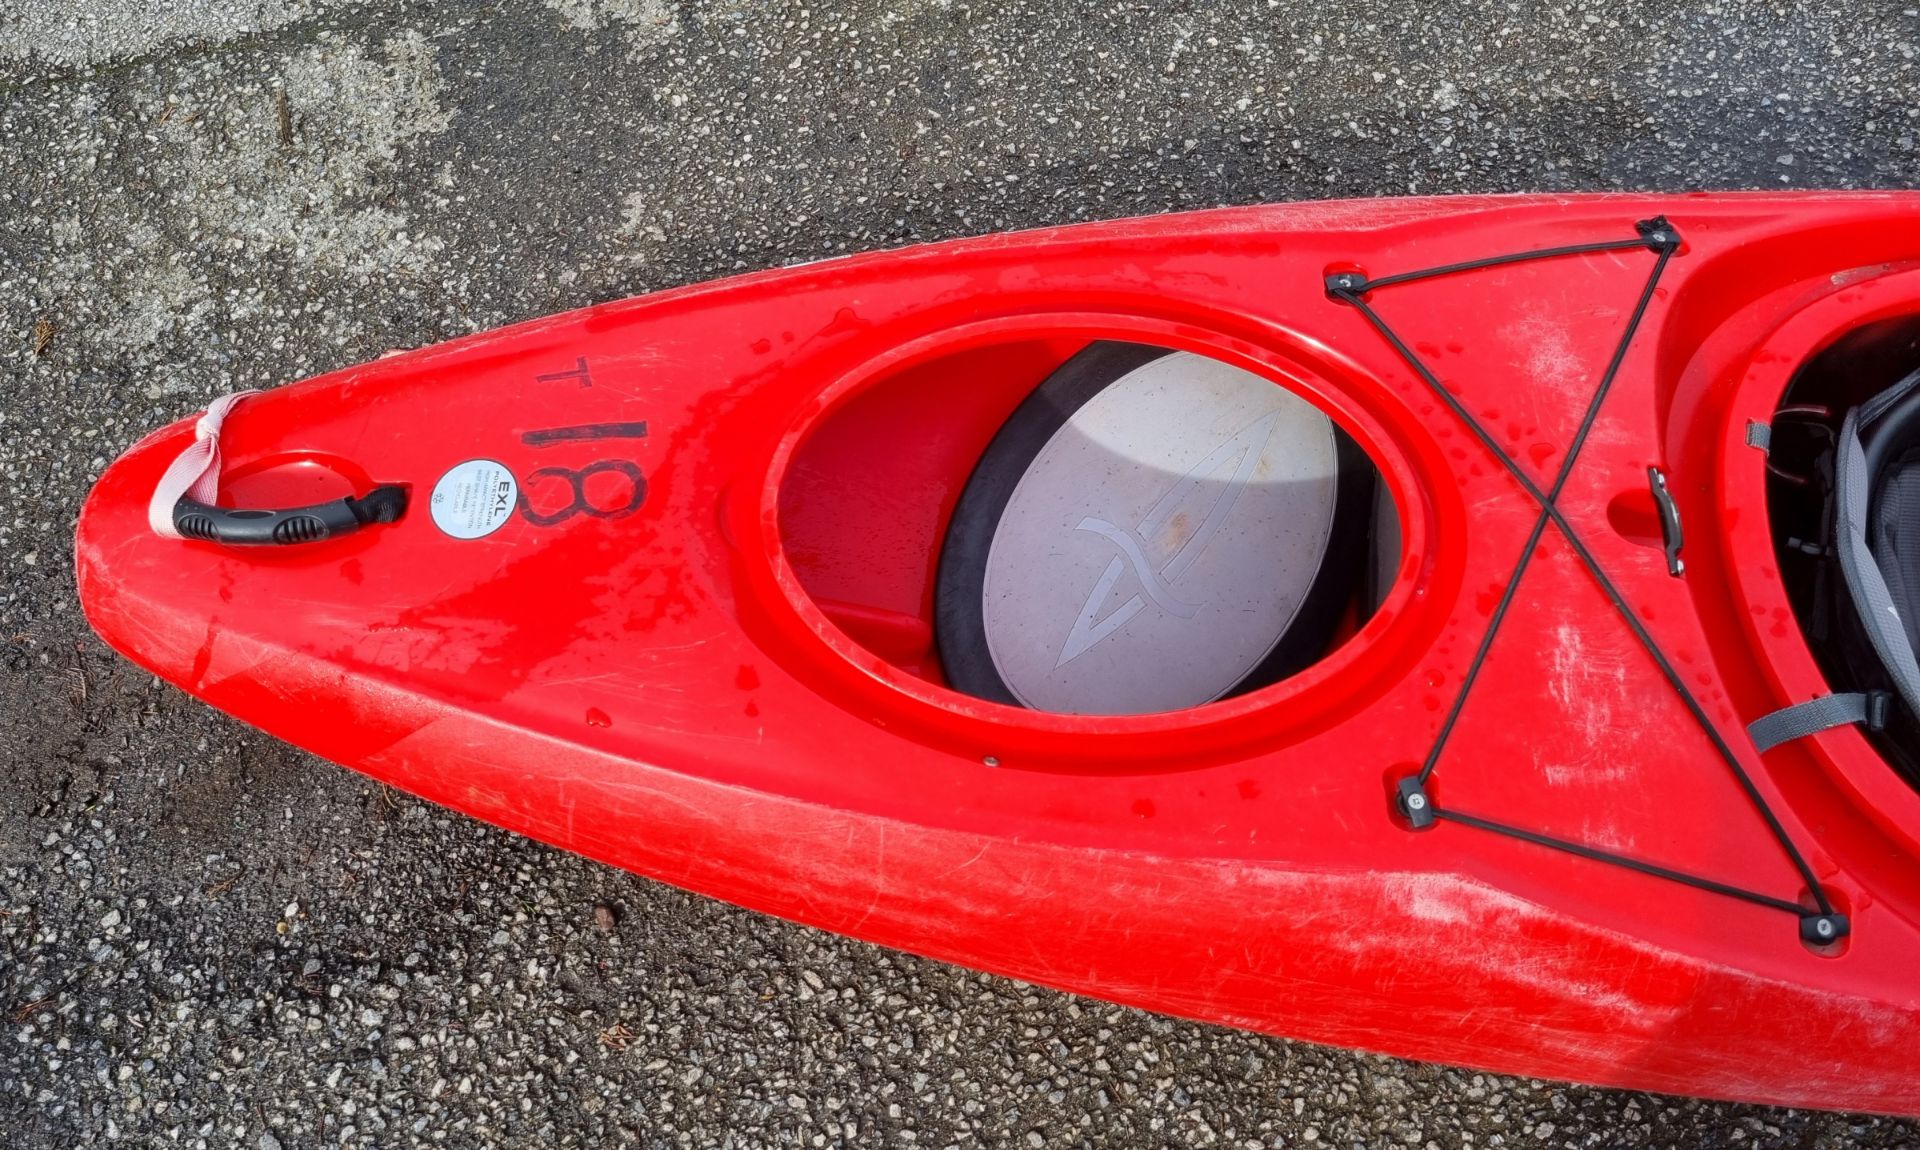 Dagger Katana polyethylene kayak - red - W 3200 x D 660 x H 420mm - Image 3 of 7